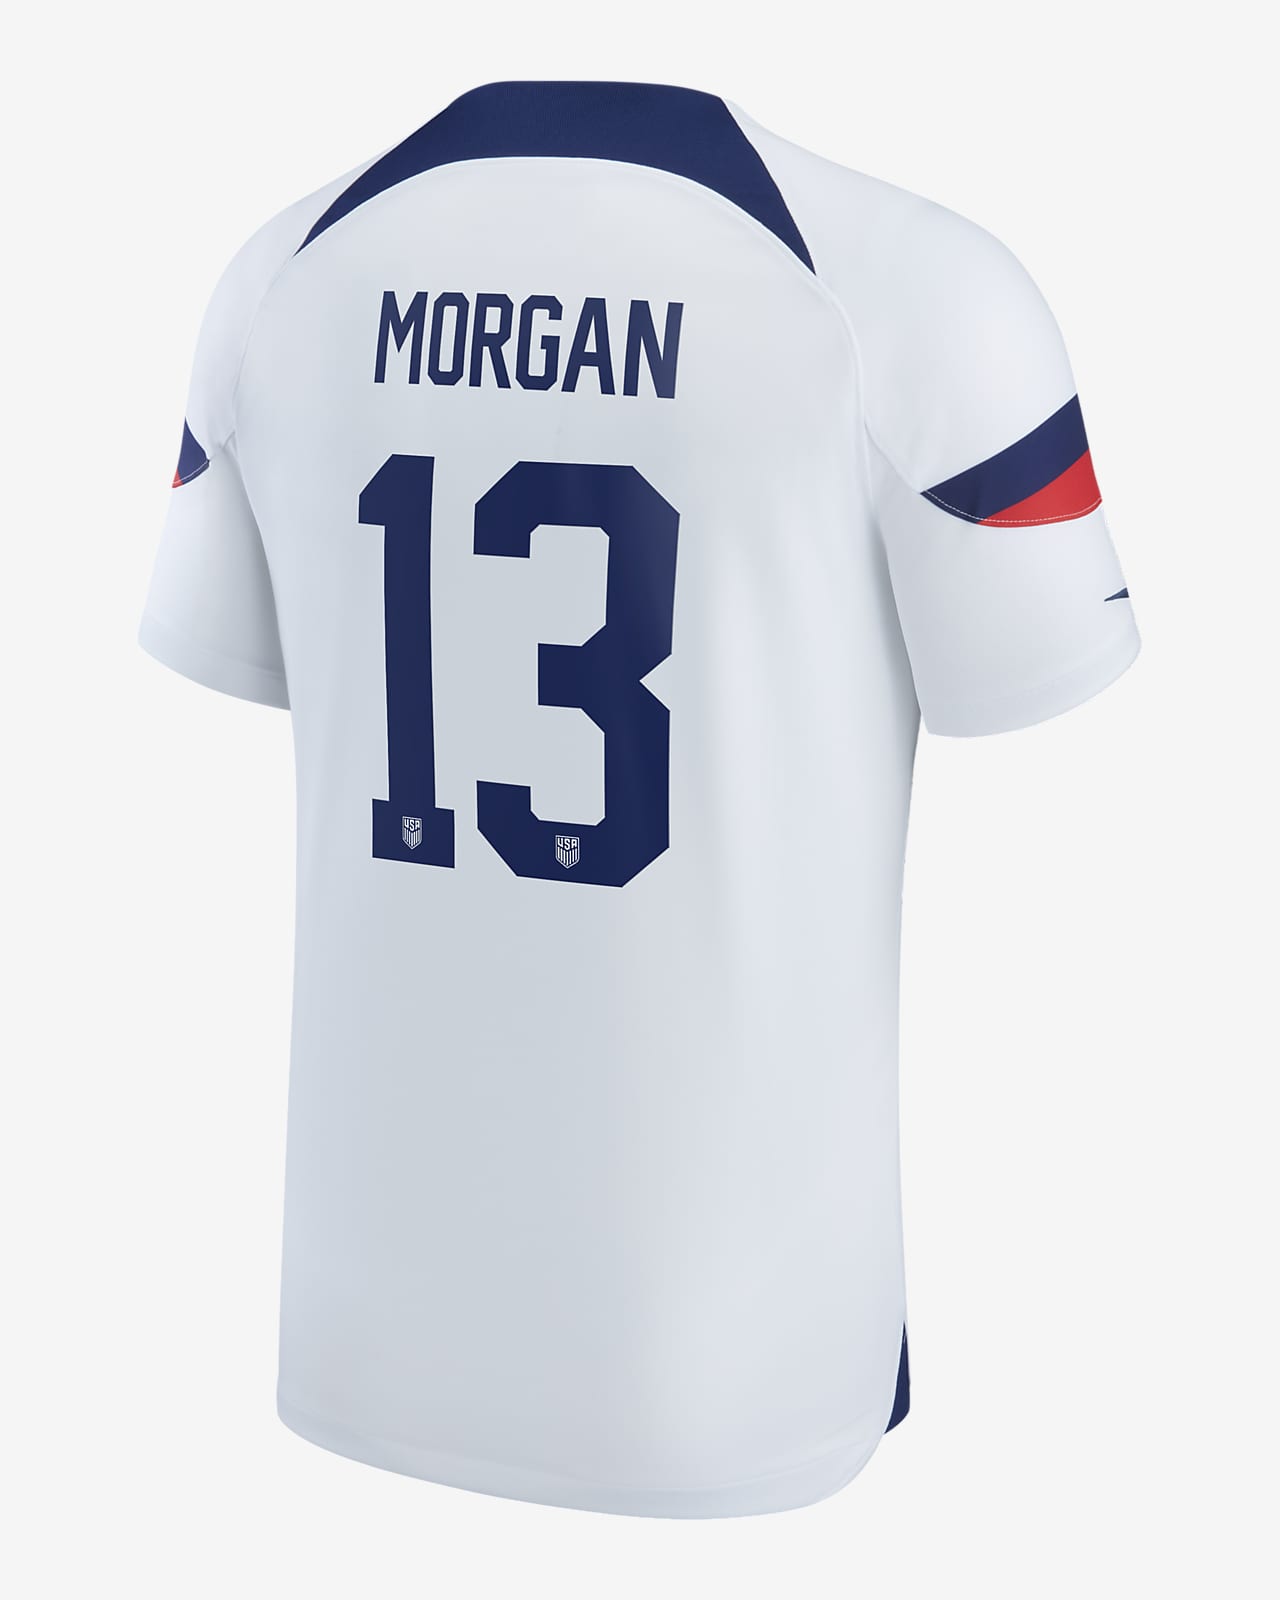 Playera de fútbol Nike para hombre Alex Morgan.